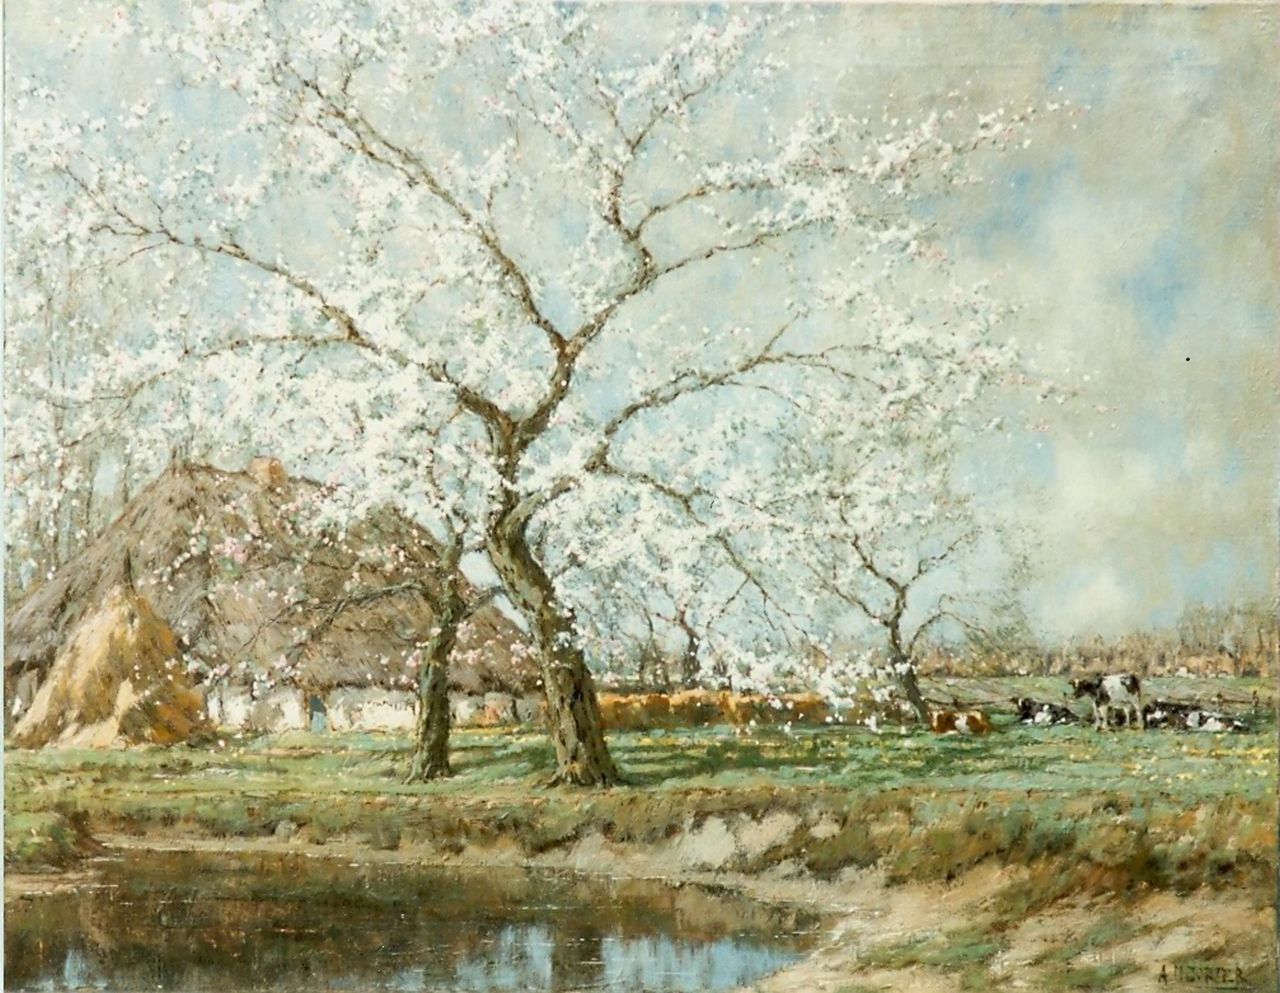 Gorter A.M.  | 'Arnold' Marc Gorter, An orchard, Öl auf Leinwand 75,4 x 96,3 cm, signed l.r.